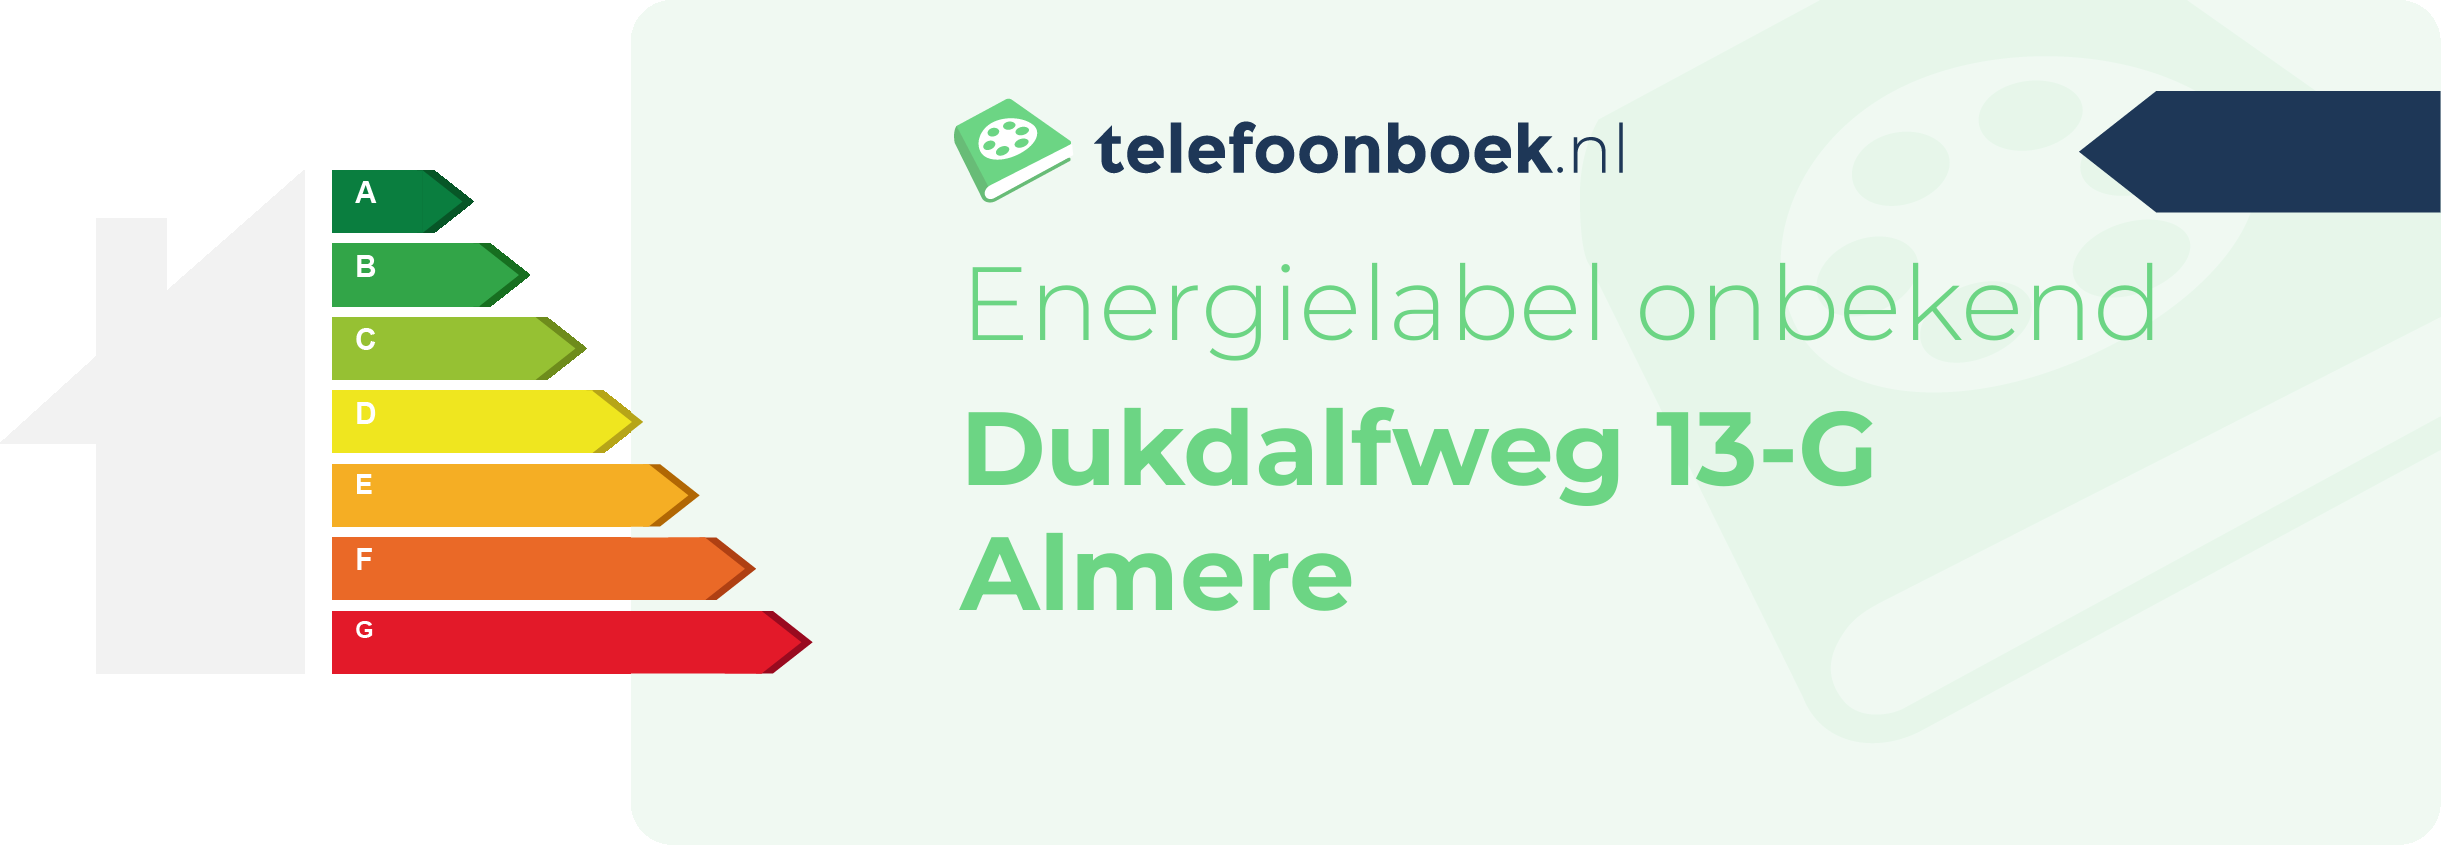 Energielabel Dukdalfweg 13-G Almere